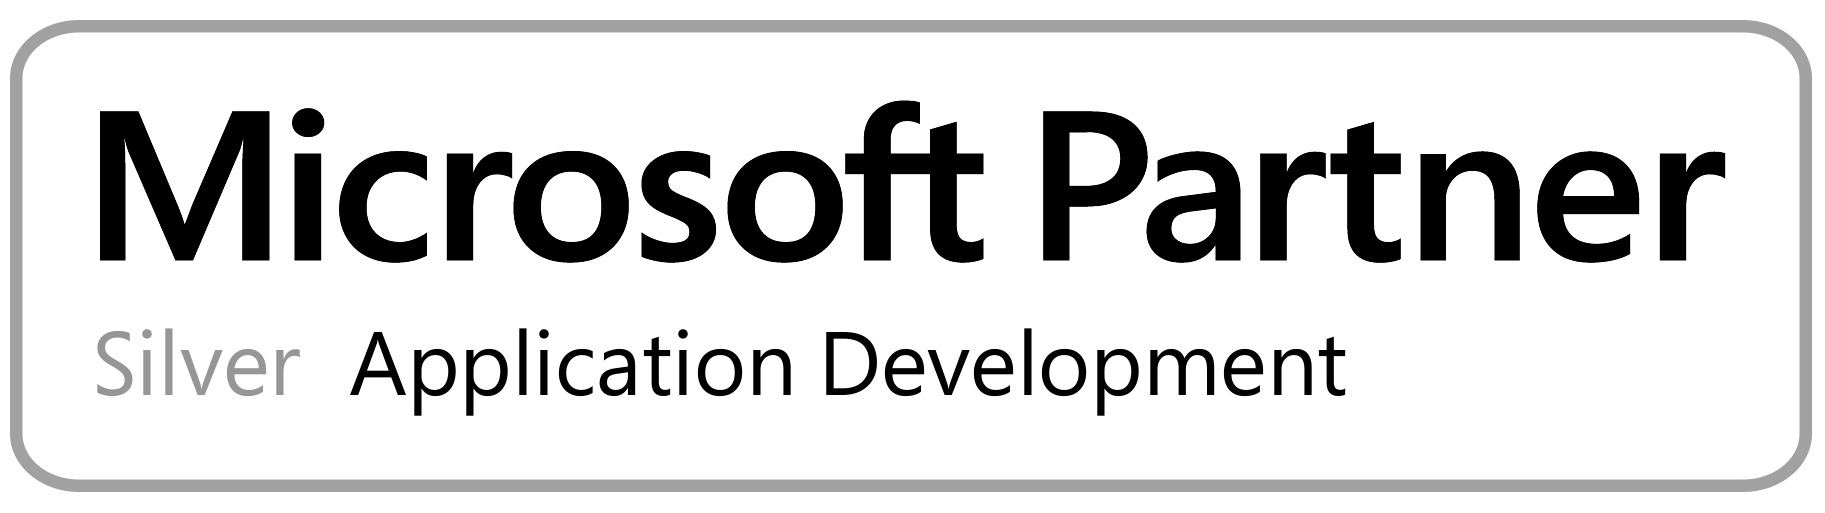 Microsoft Partner Netword